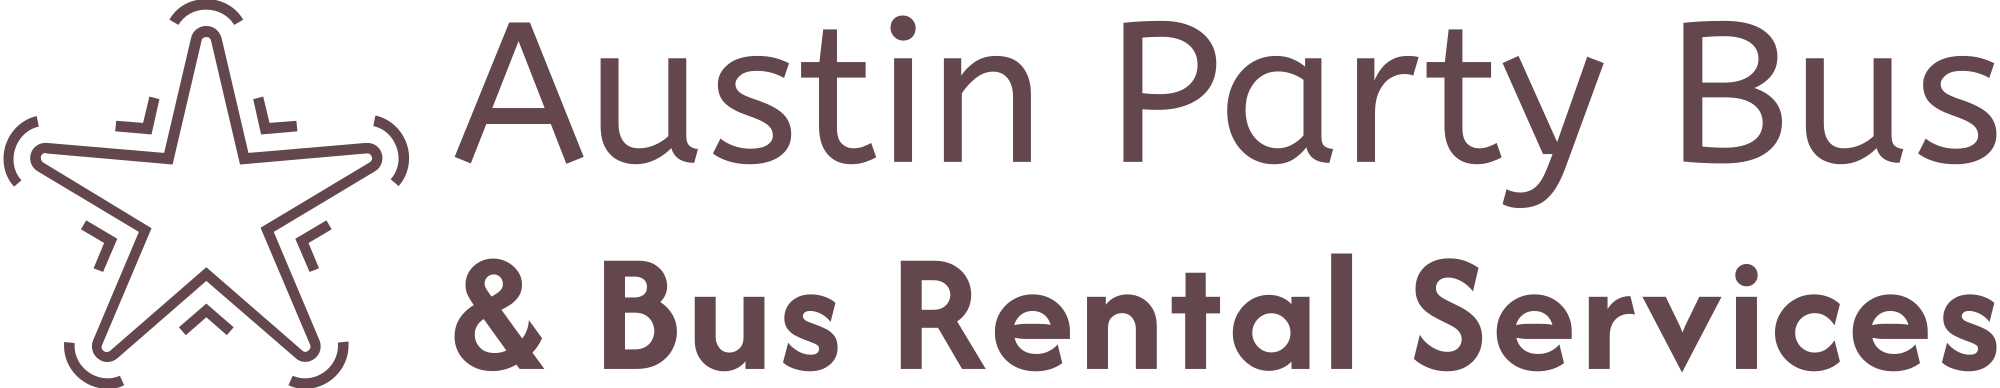 Austin Party Bus Company logo